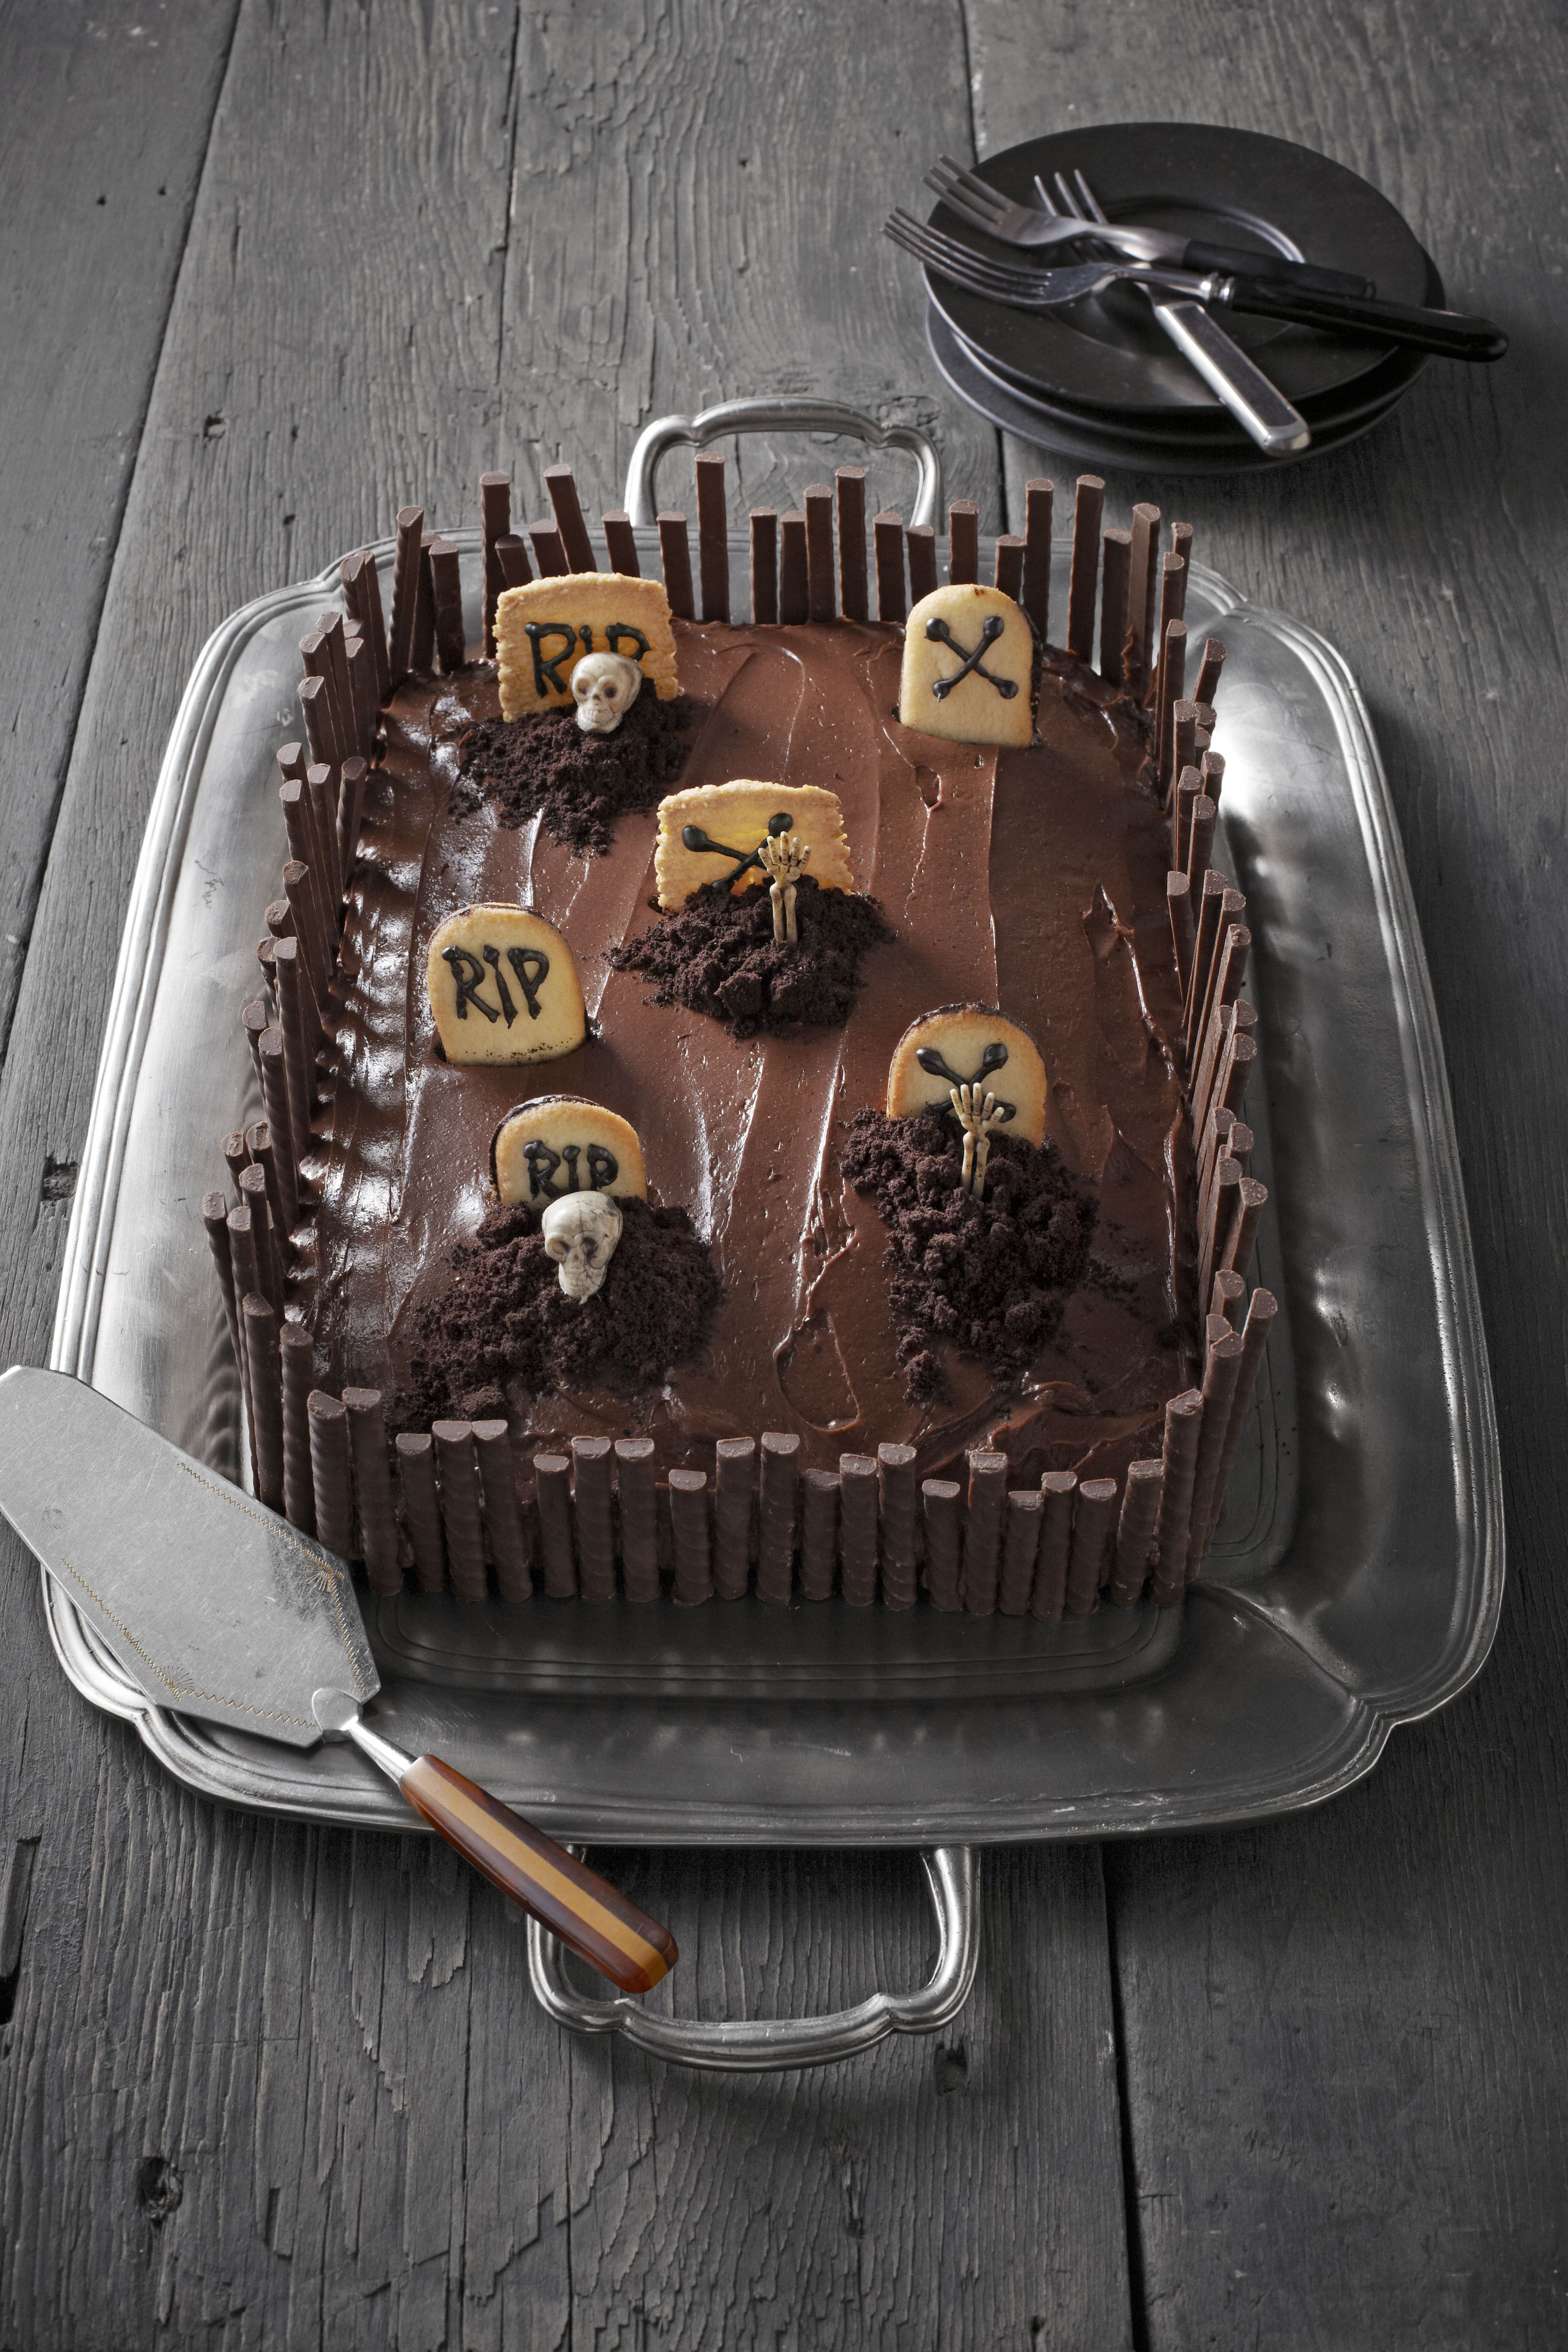 Horror birthday cake(I tried) : r/cakedecorating